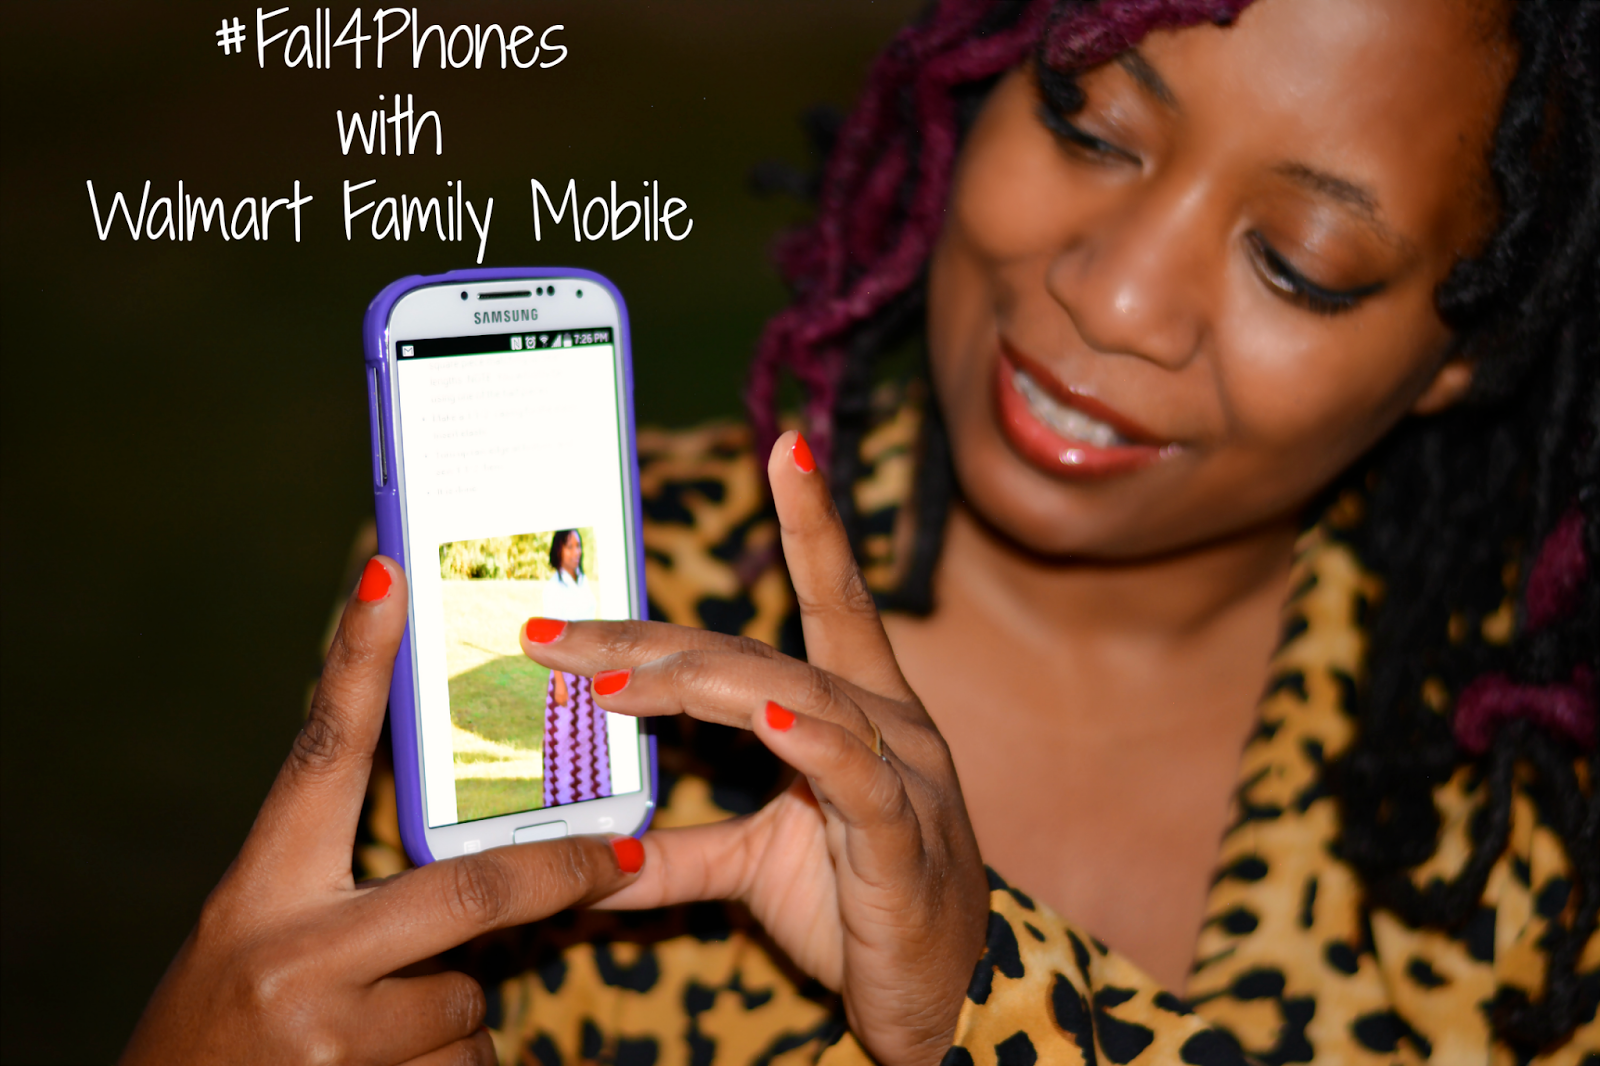 walmart family mobile #fall4phones #shop #cbias